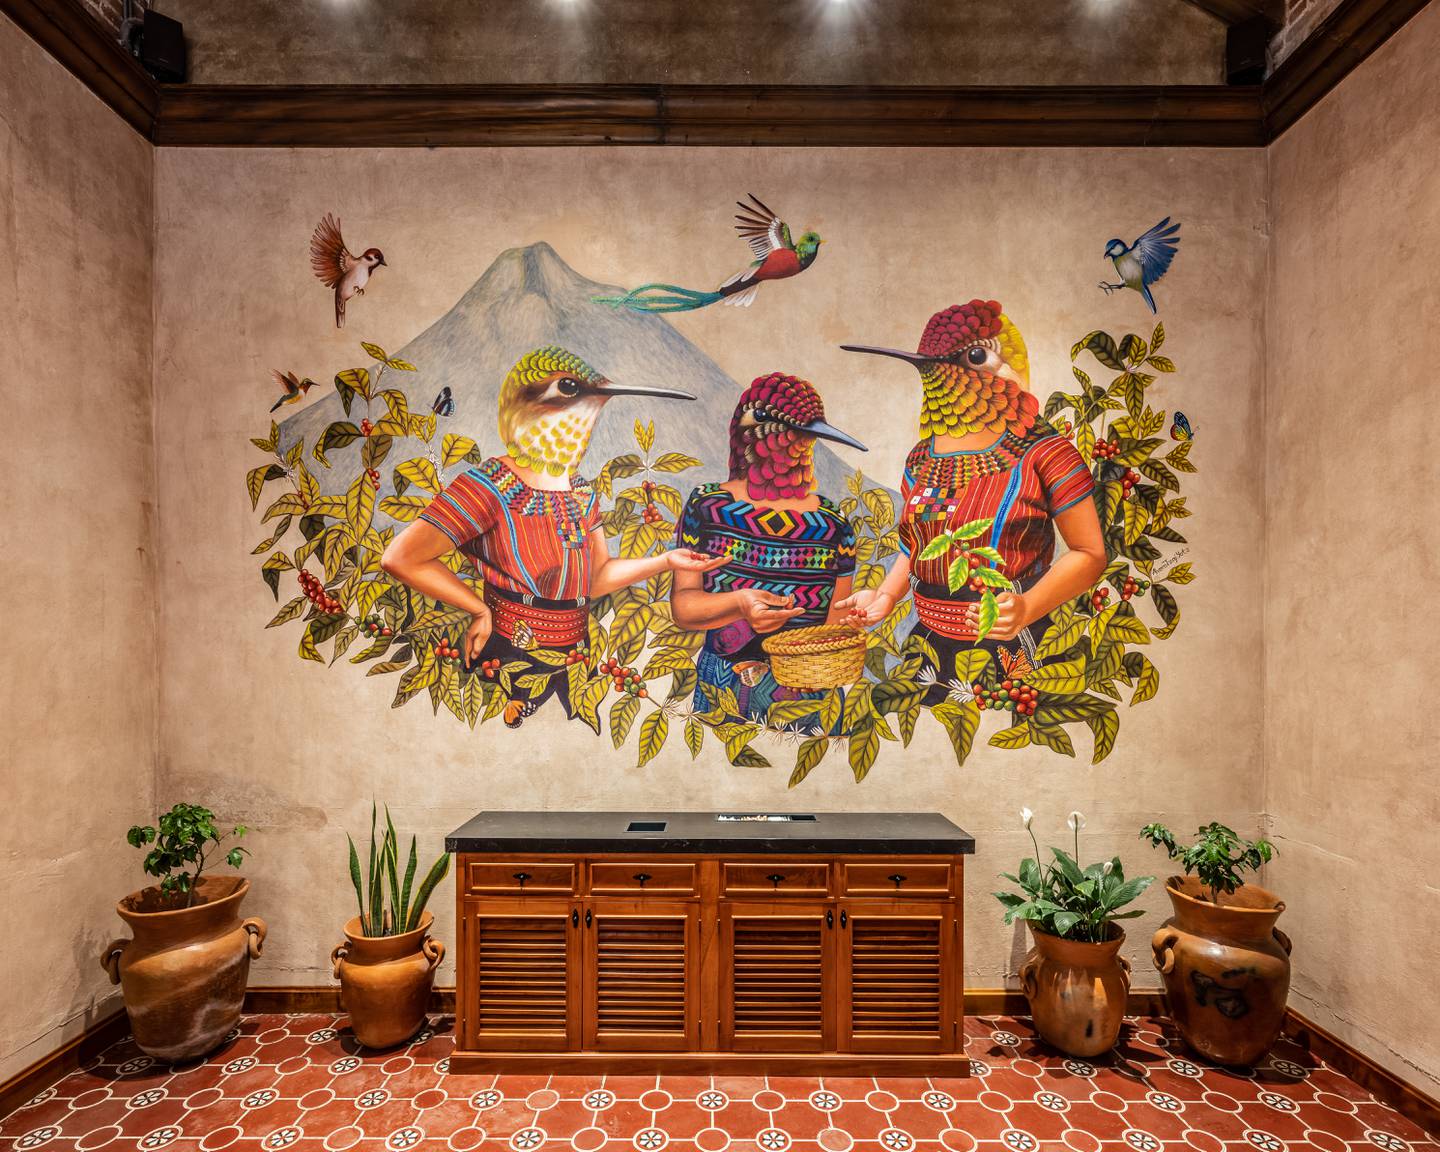 A work by Sololá, Guatemala-born artist Álvaro Tzaj Yotz that shows three women, represented by hummingbirds, feeding from a coffee plant and sharing coffee beans.